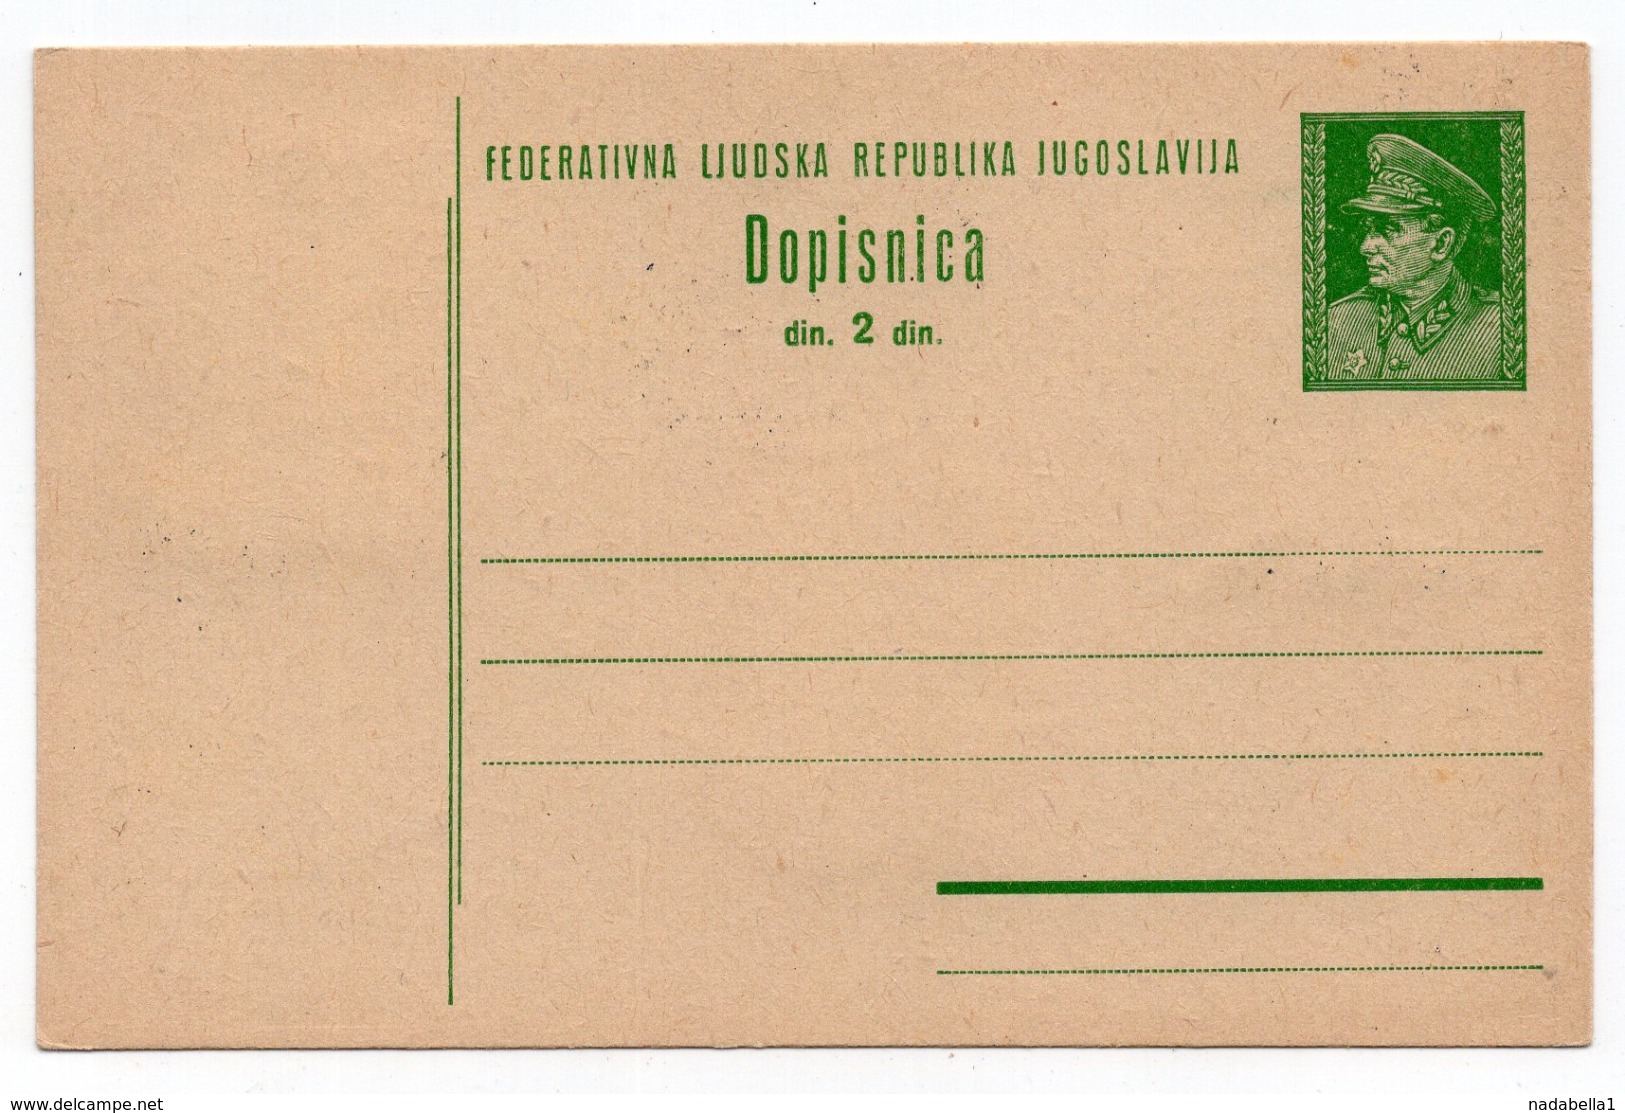 08.02.1949. DF YUGOSLAVIA, FRANCE PRESEREN, SPECIAL CANCELLATION, TITO, 2 DINARA, STATIONERY CARD, USED - Entiers Postaux